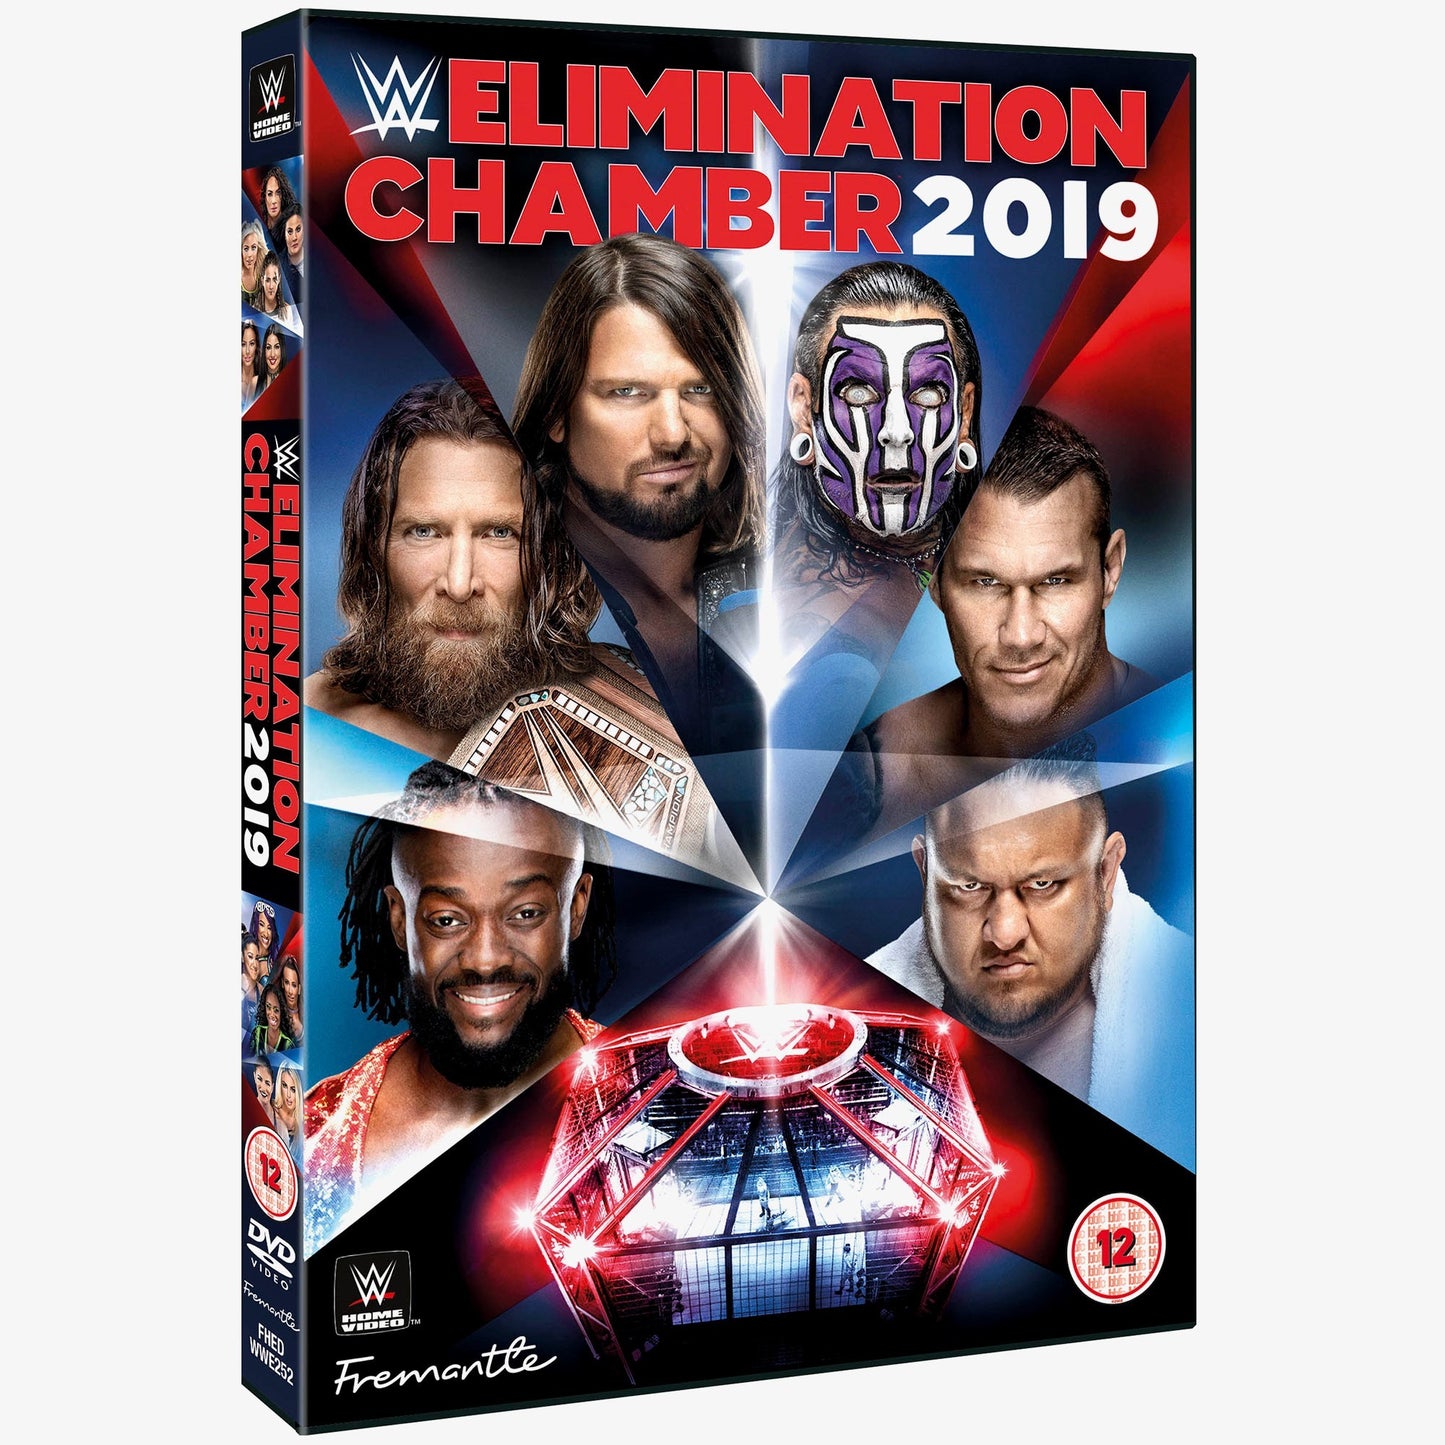 WWE Elimination Chamber 2019 DVD